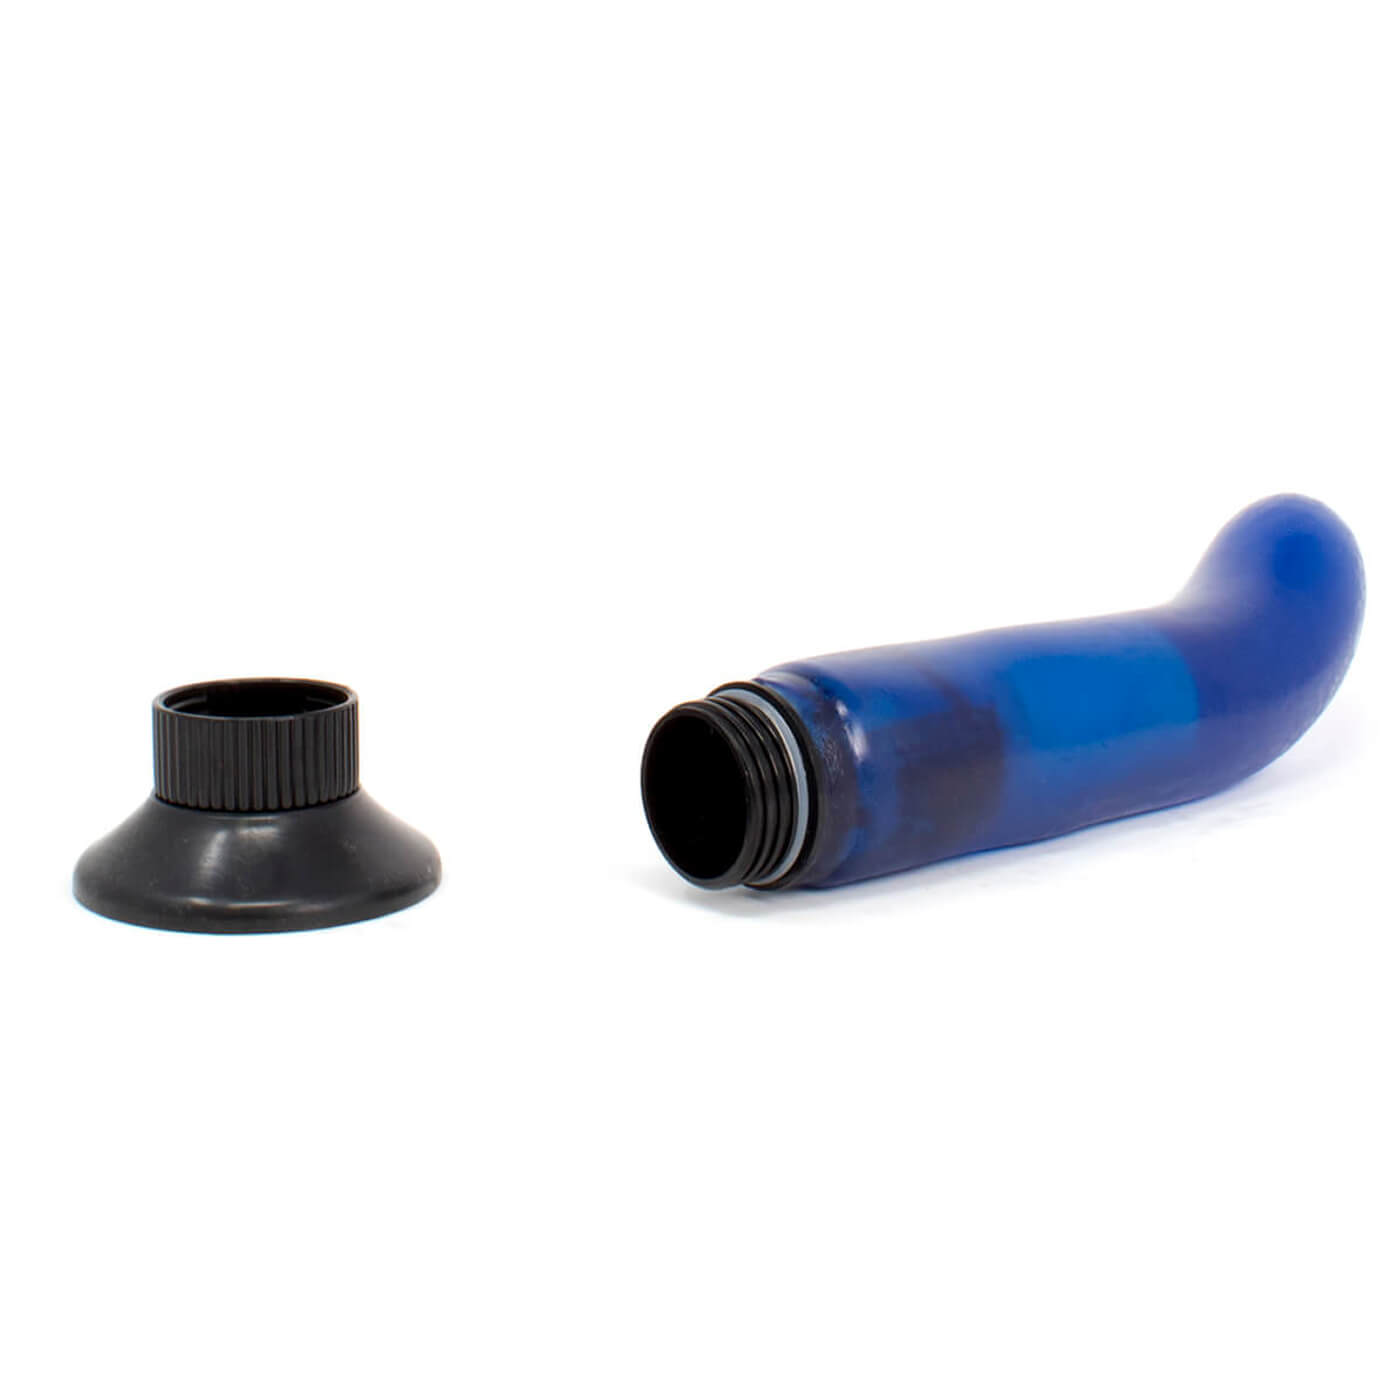 Wall Bangers Waterproof G-Spot Suction Cup Vibrator